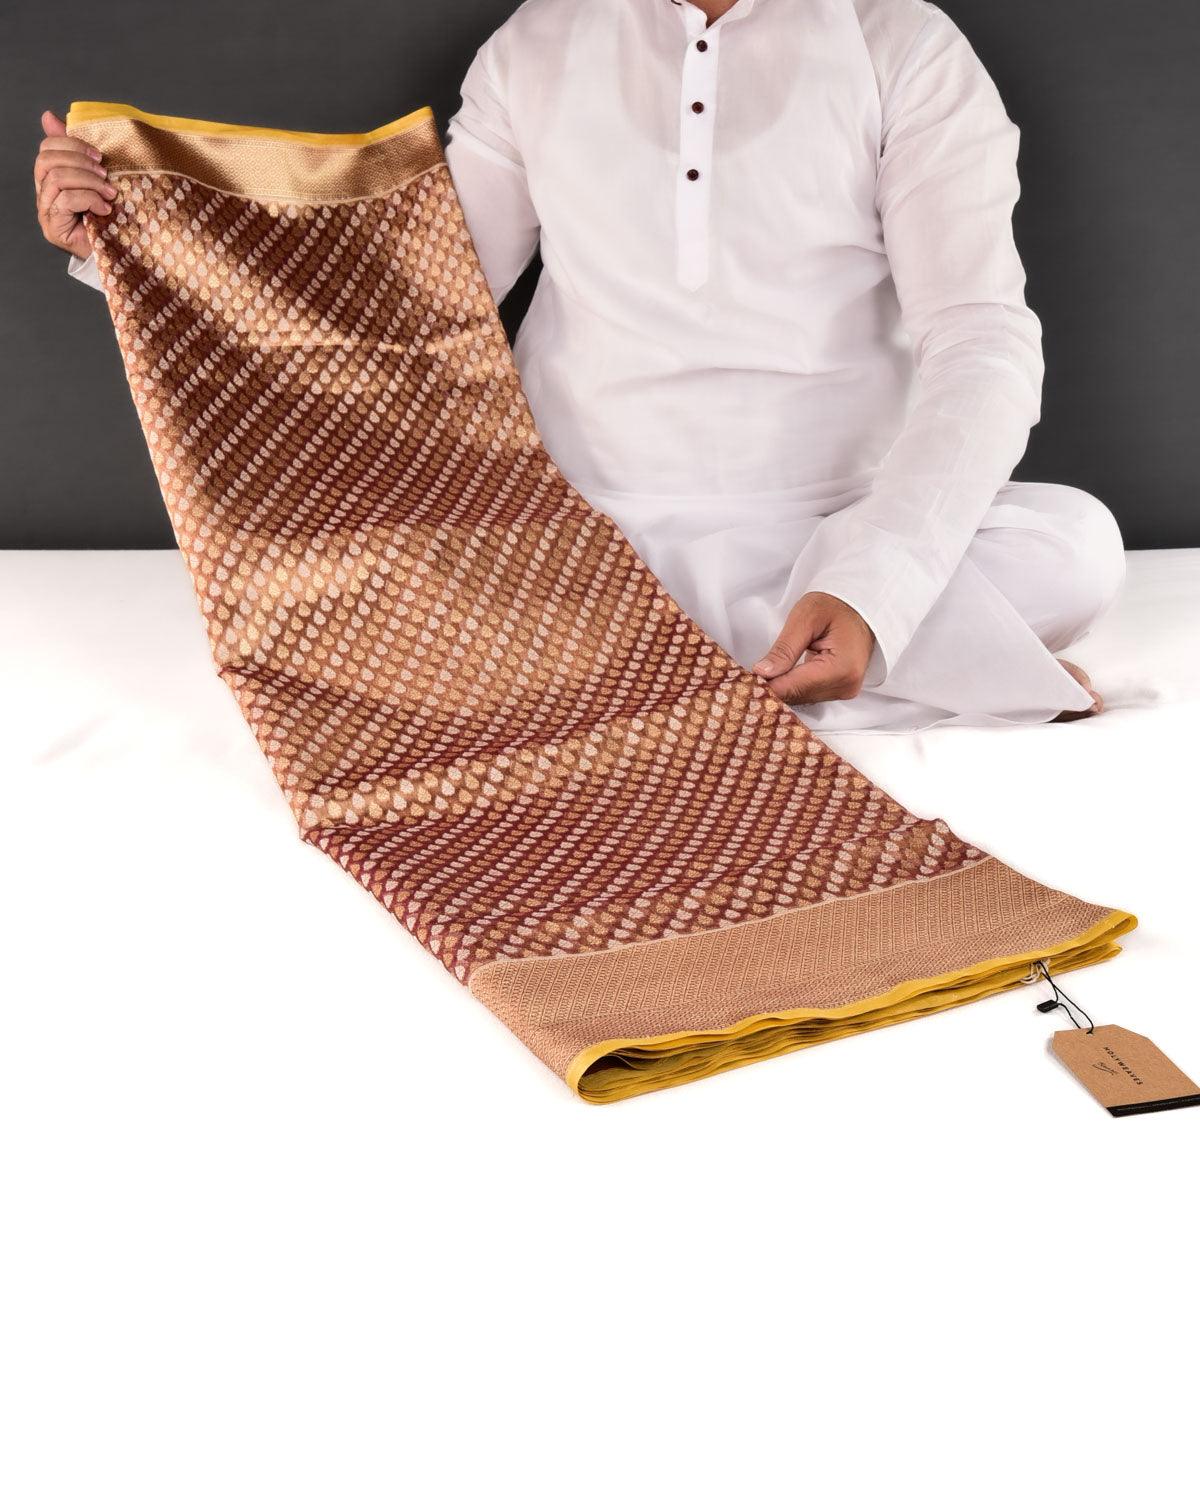 Metallic Maroon Banarasi Resham & Gold Zari Ghani Buti Cutwork Brocade Handwoven Kora Tissue Saree - By HolyWeaves, Benares